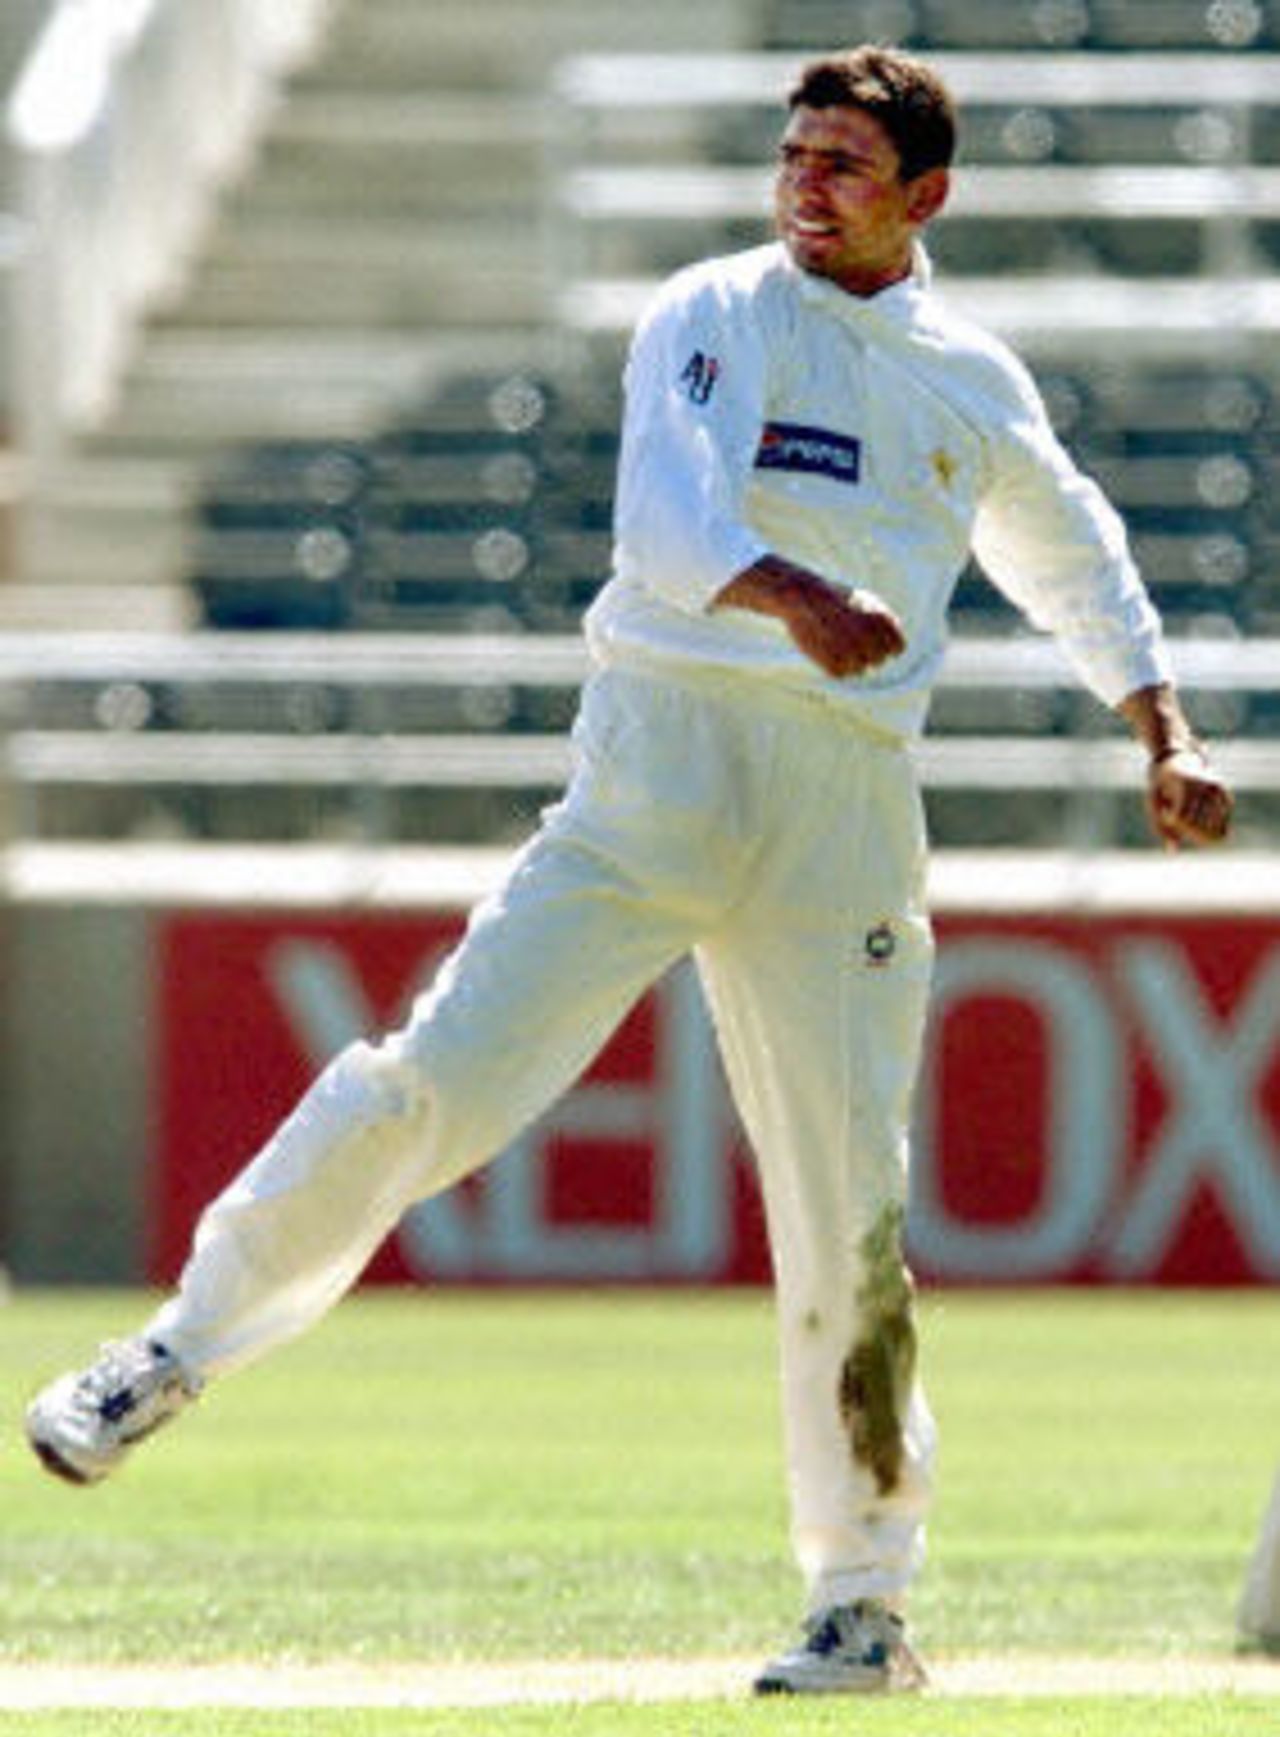 Saqlain Mushtaq celebrates the wicket of Adam Parore, day 2, 2nd Test at Christchurch, 15-19 March 2001.